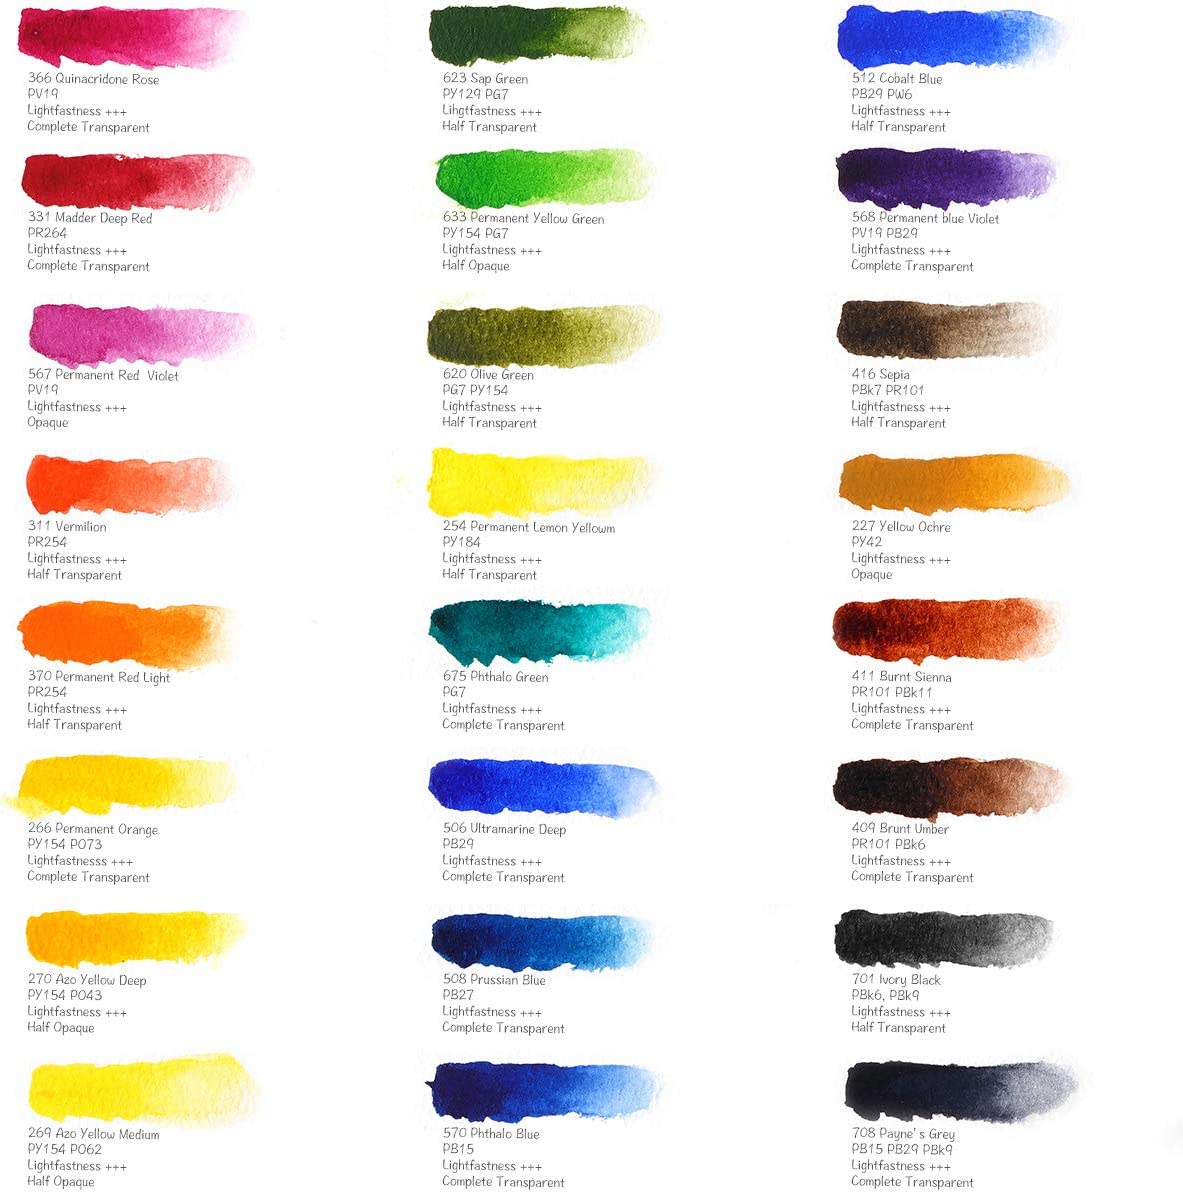 Paul Rubens Aquarellfarben in 24 leuchtenden Farben, hochpigmentiert 